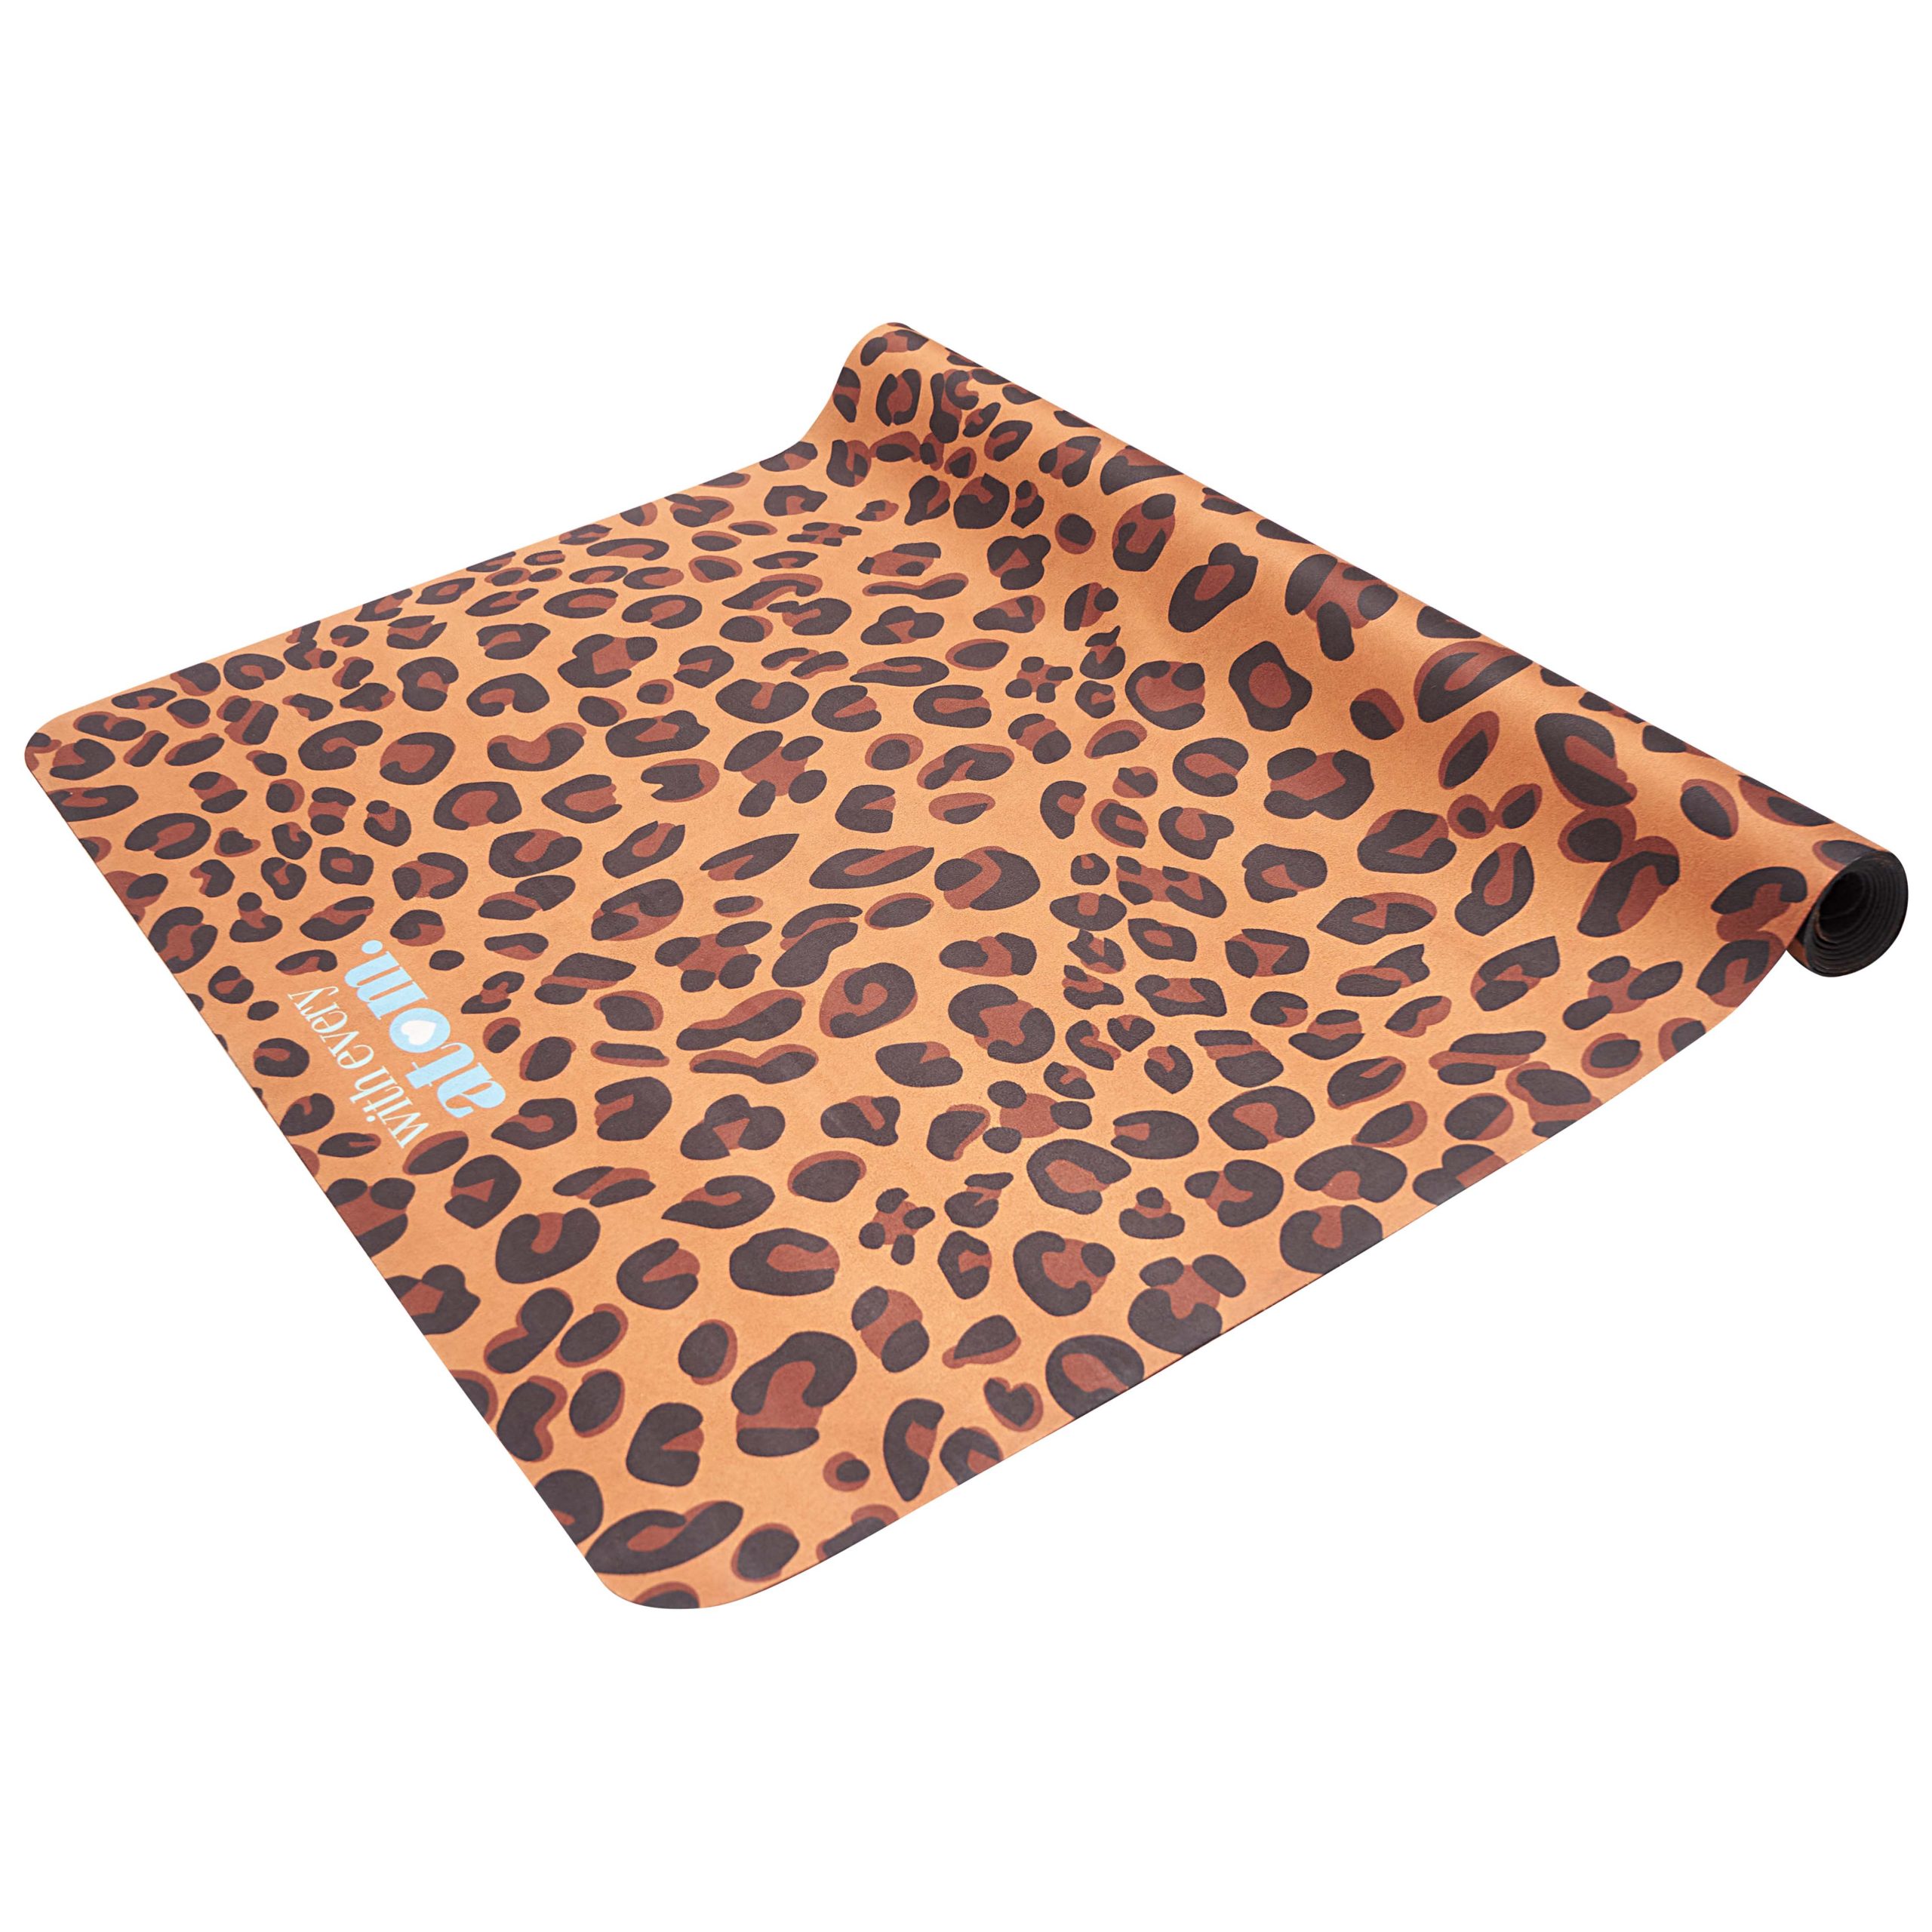 Leopard Pattern Design Yoga Mat for Exercise, 72x24in/ 183x61cmx0.6cm, Multi